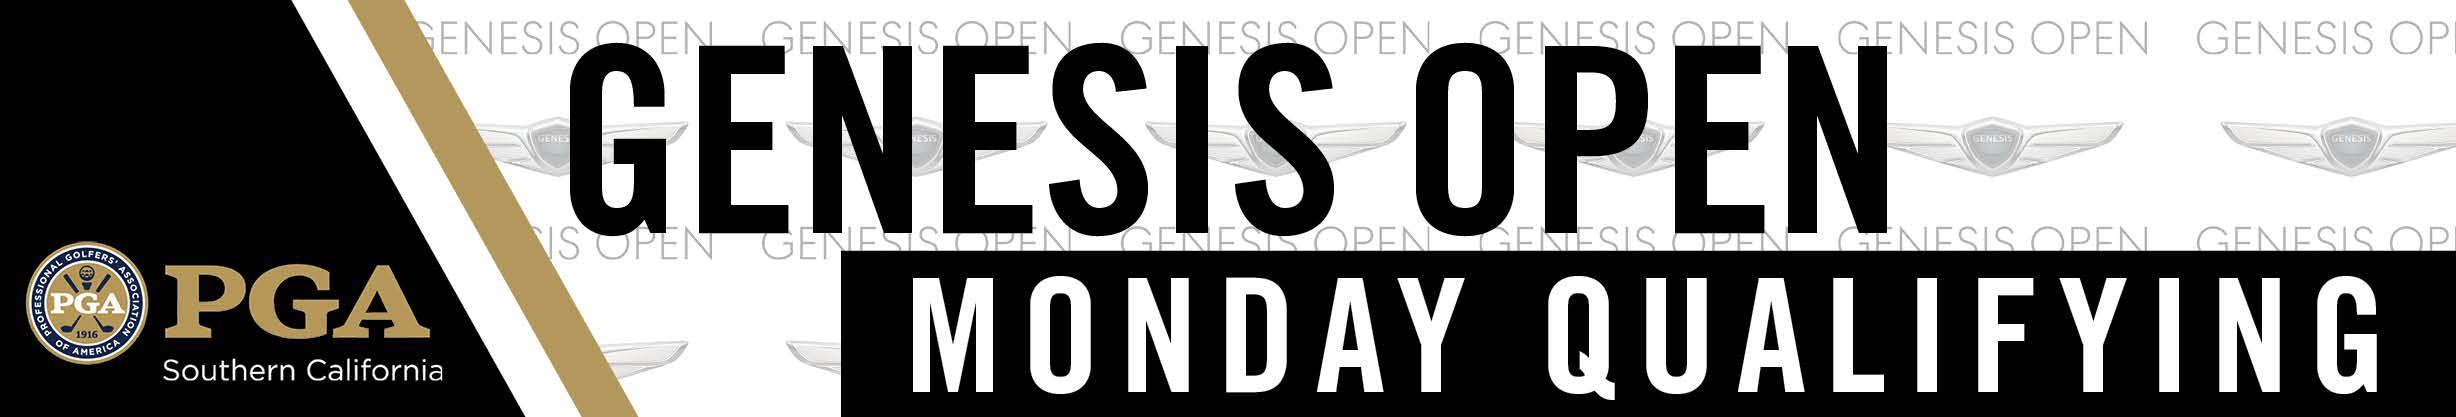 Genesis Open Logo - Genesis Open Event Qualifier - Southern California PGA